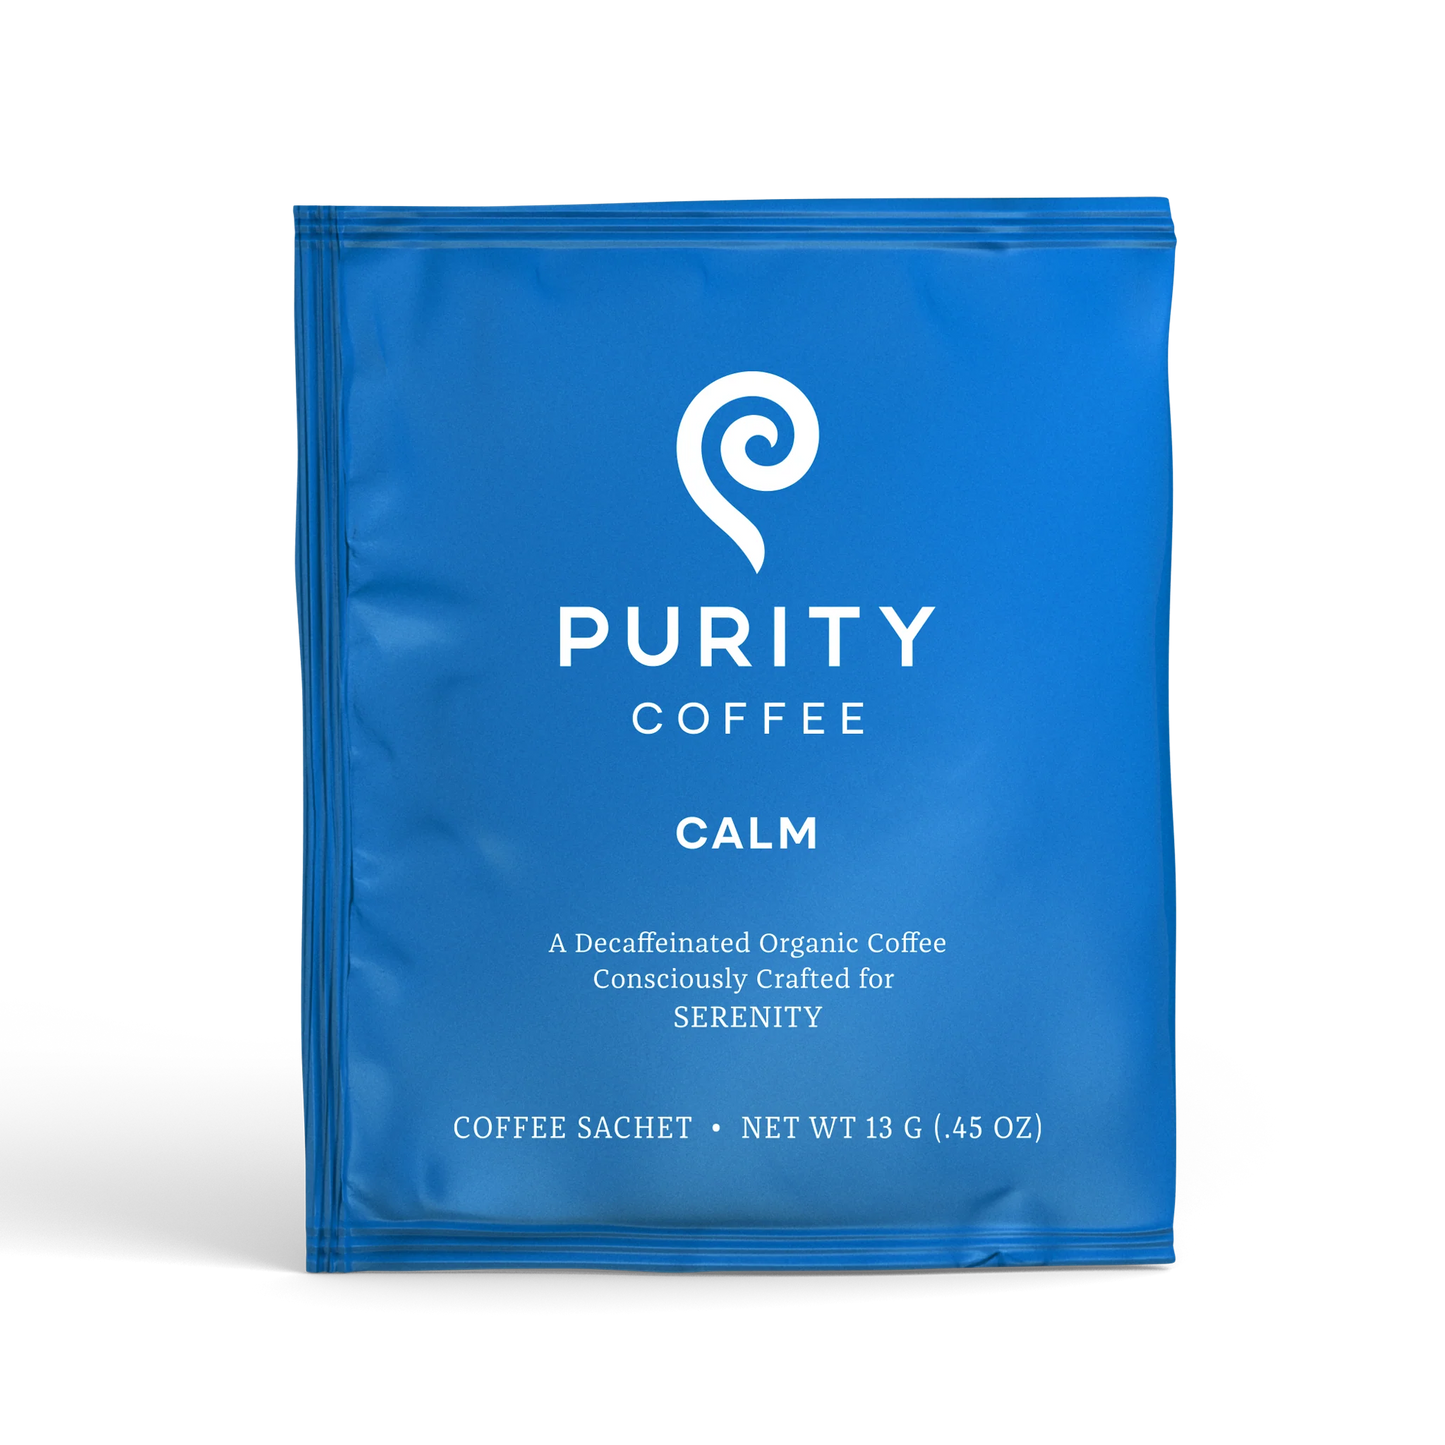 Purity Organic Coffee Calm Decaf Single-Serve Coffee Sachets